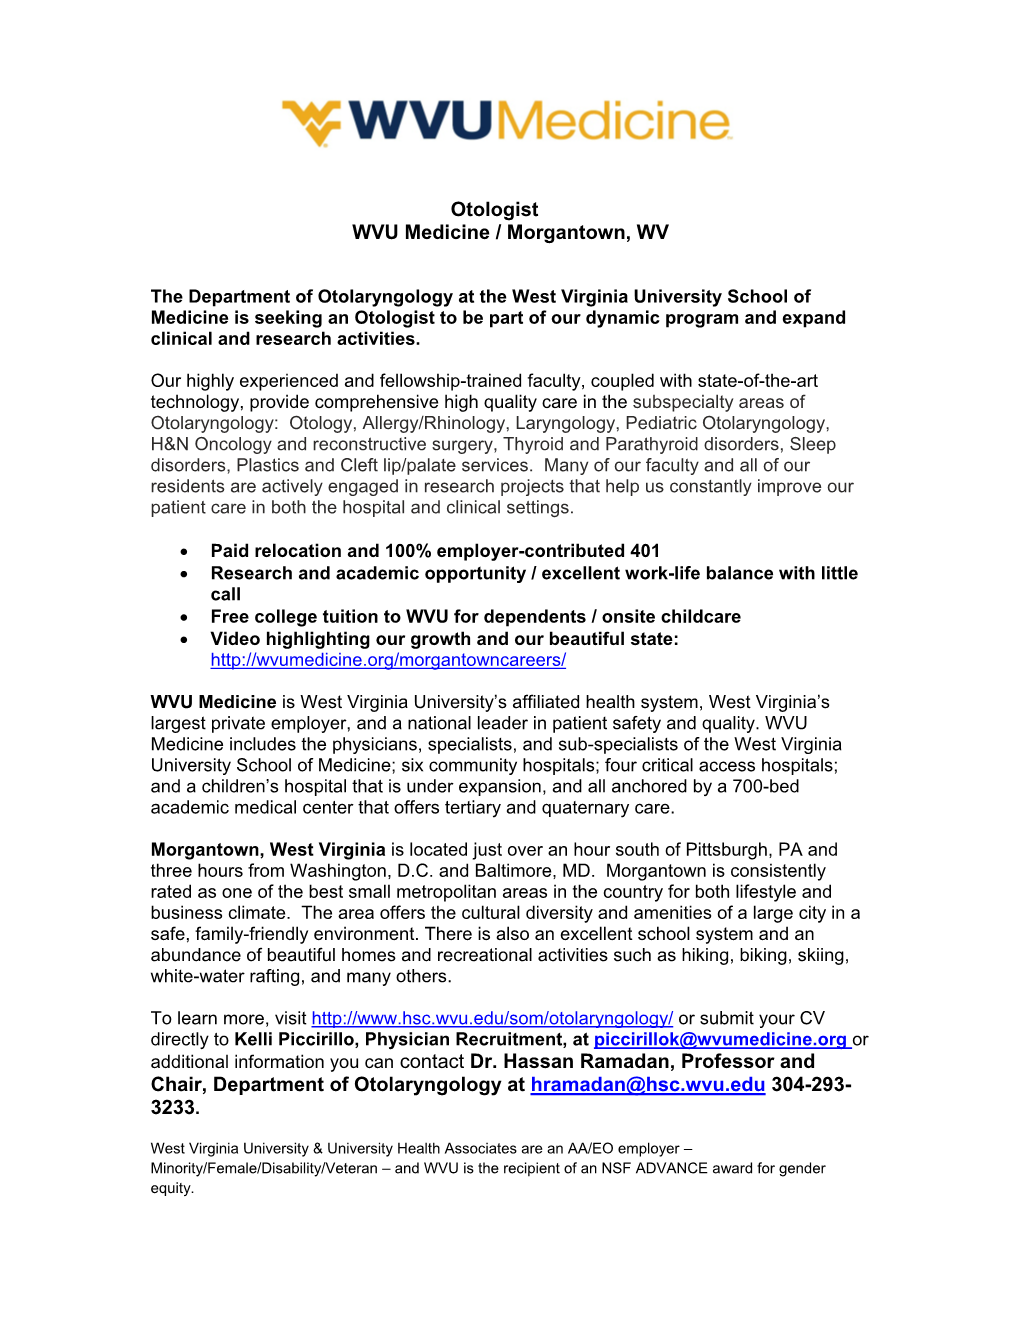 Otologist WVU Medicine / Morgantown, WV Additional Information You Can